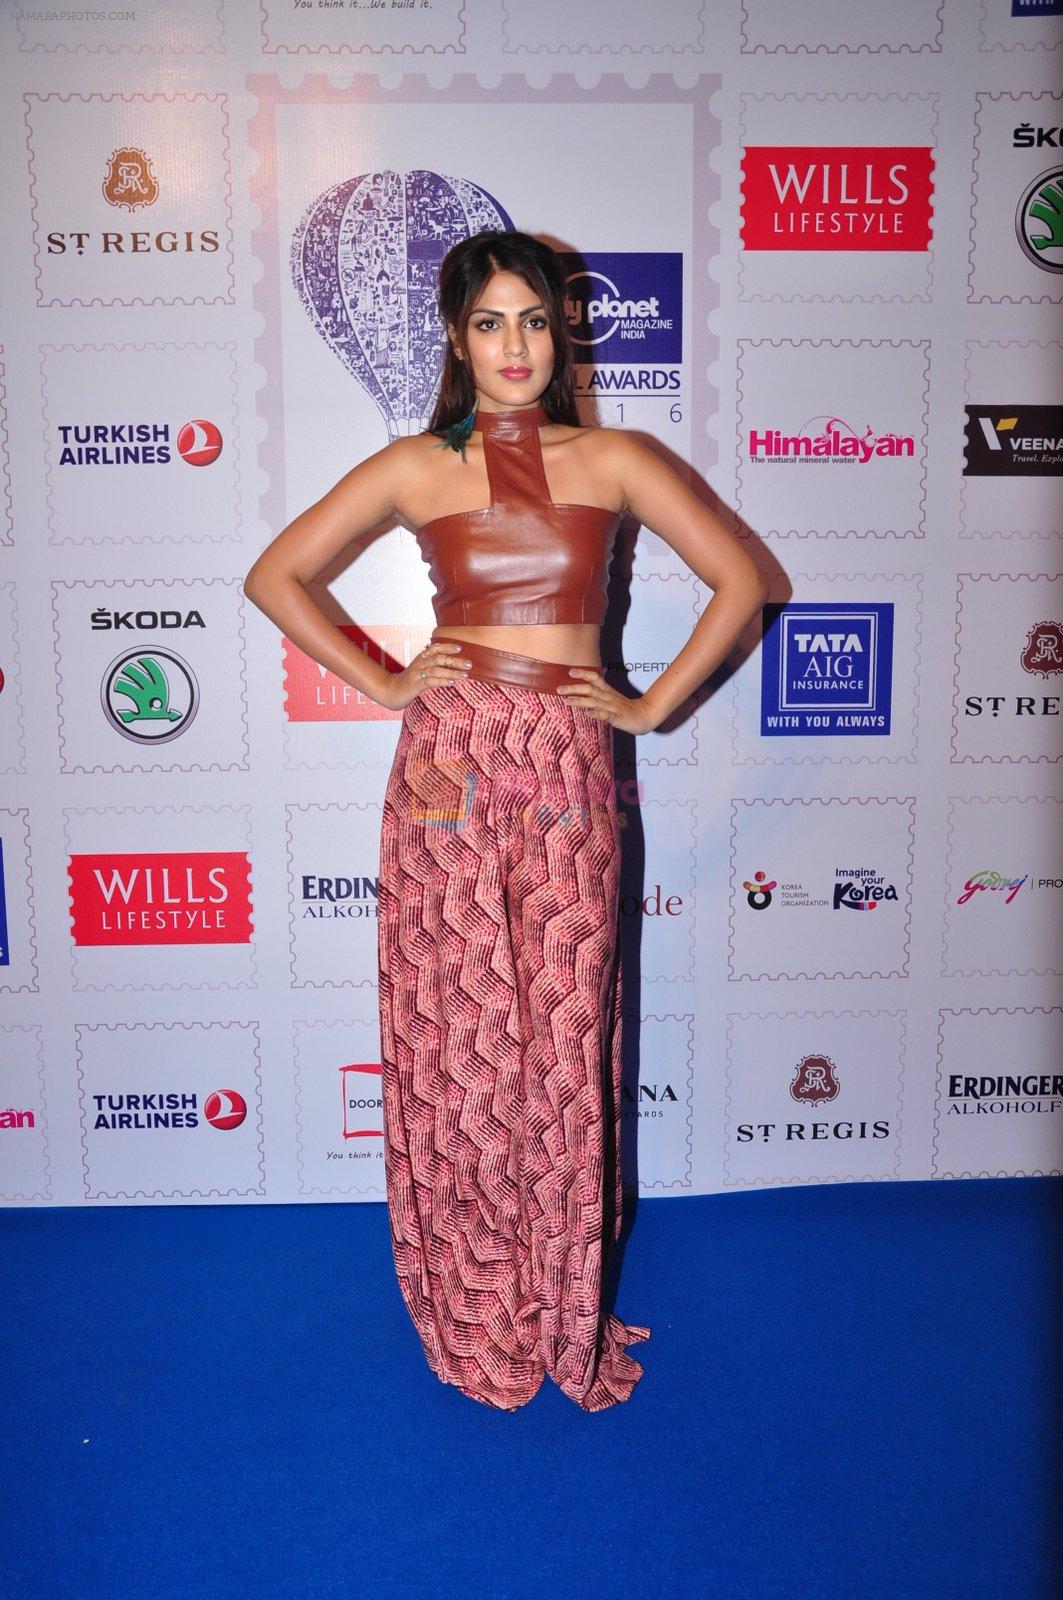 Rhea Chakraborty at Lonely Planet Awards in Mumbai on 9th May 2016